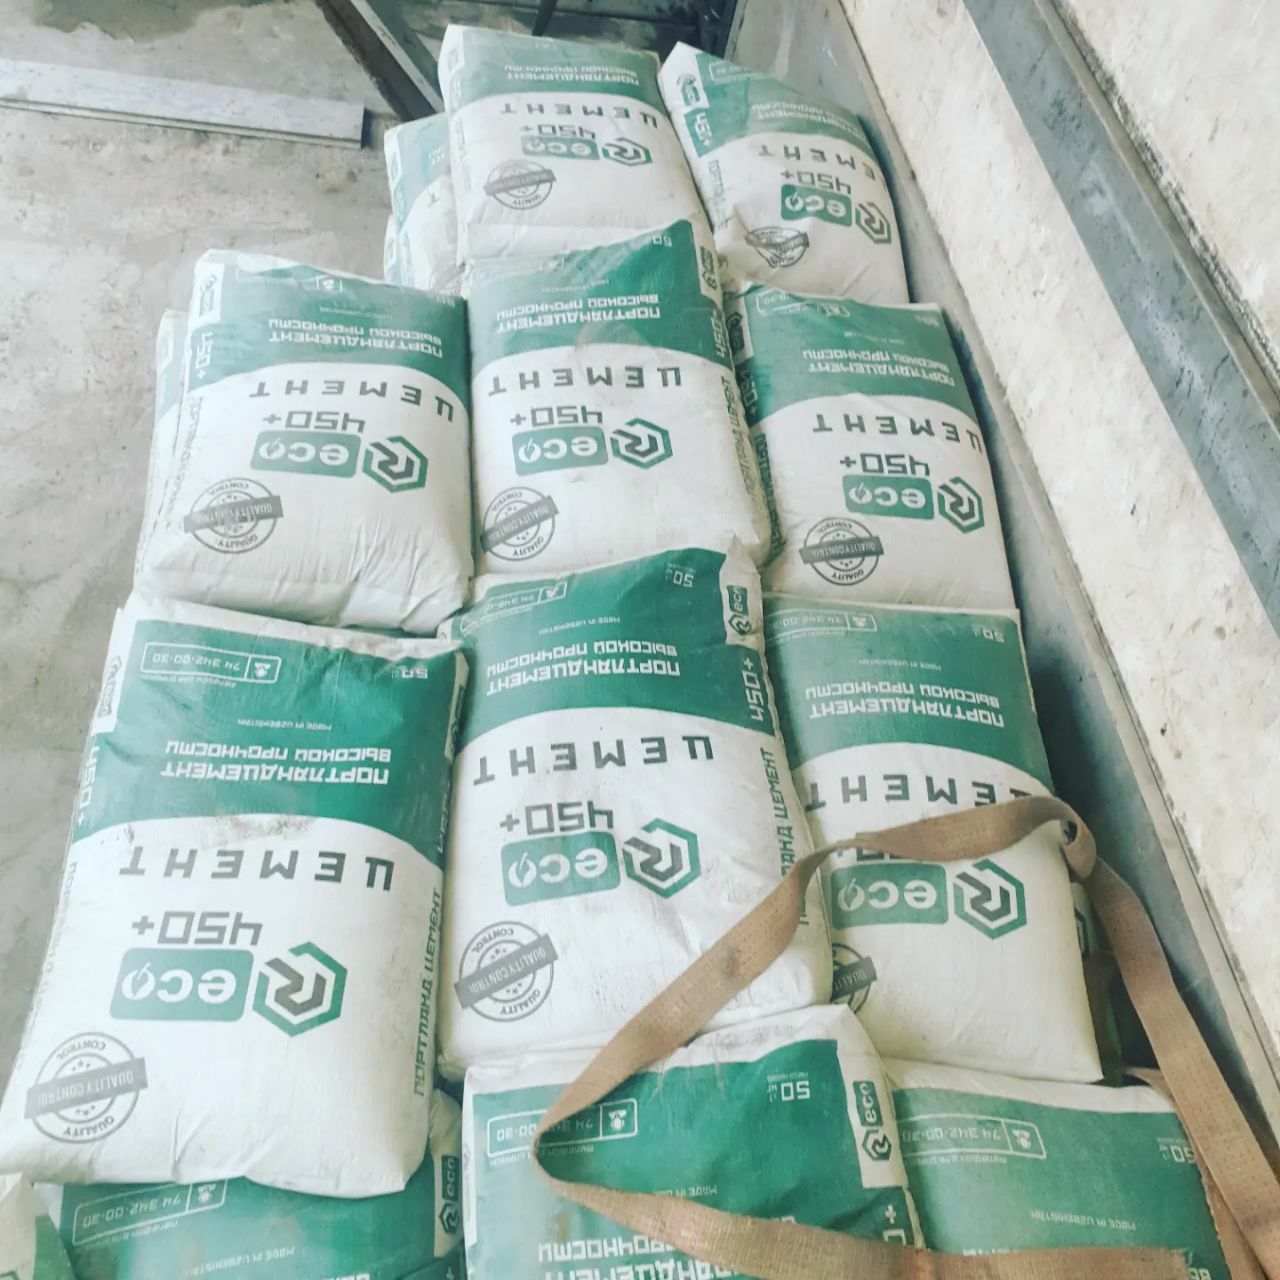 Reco м450 Цемент Узбекистонда ишлаб чикарилган sement семент